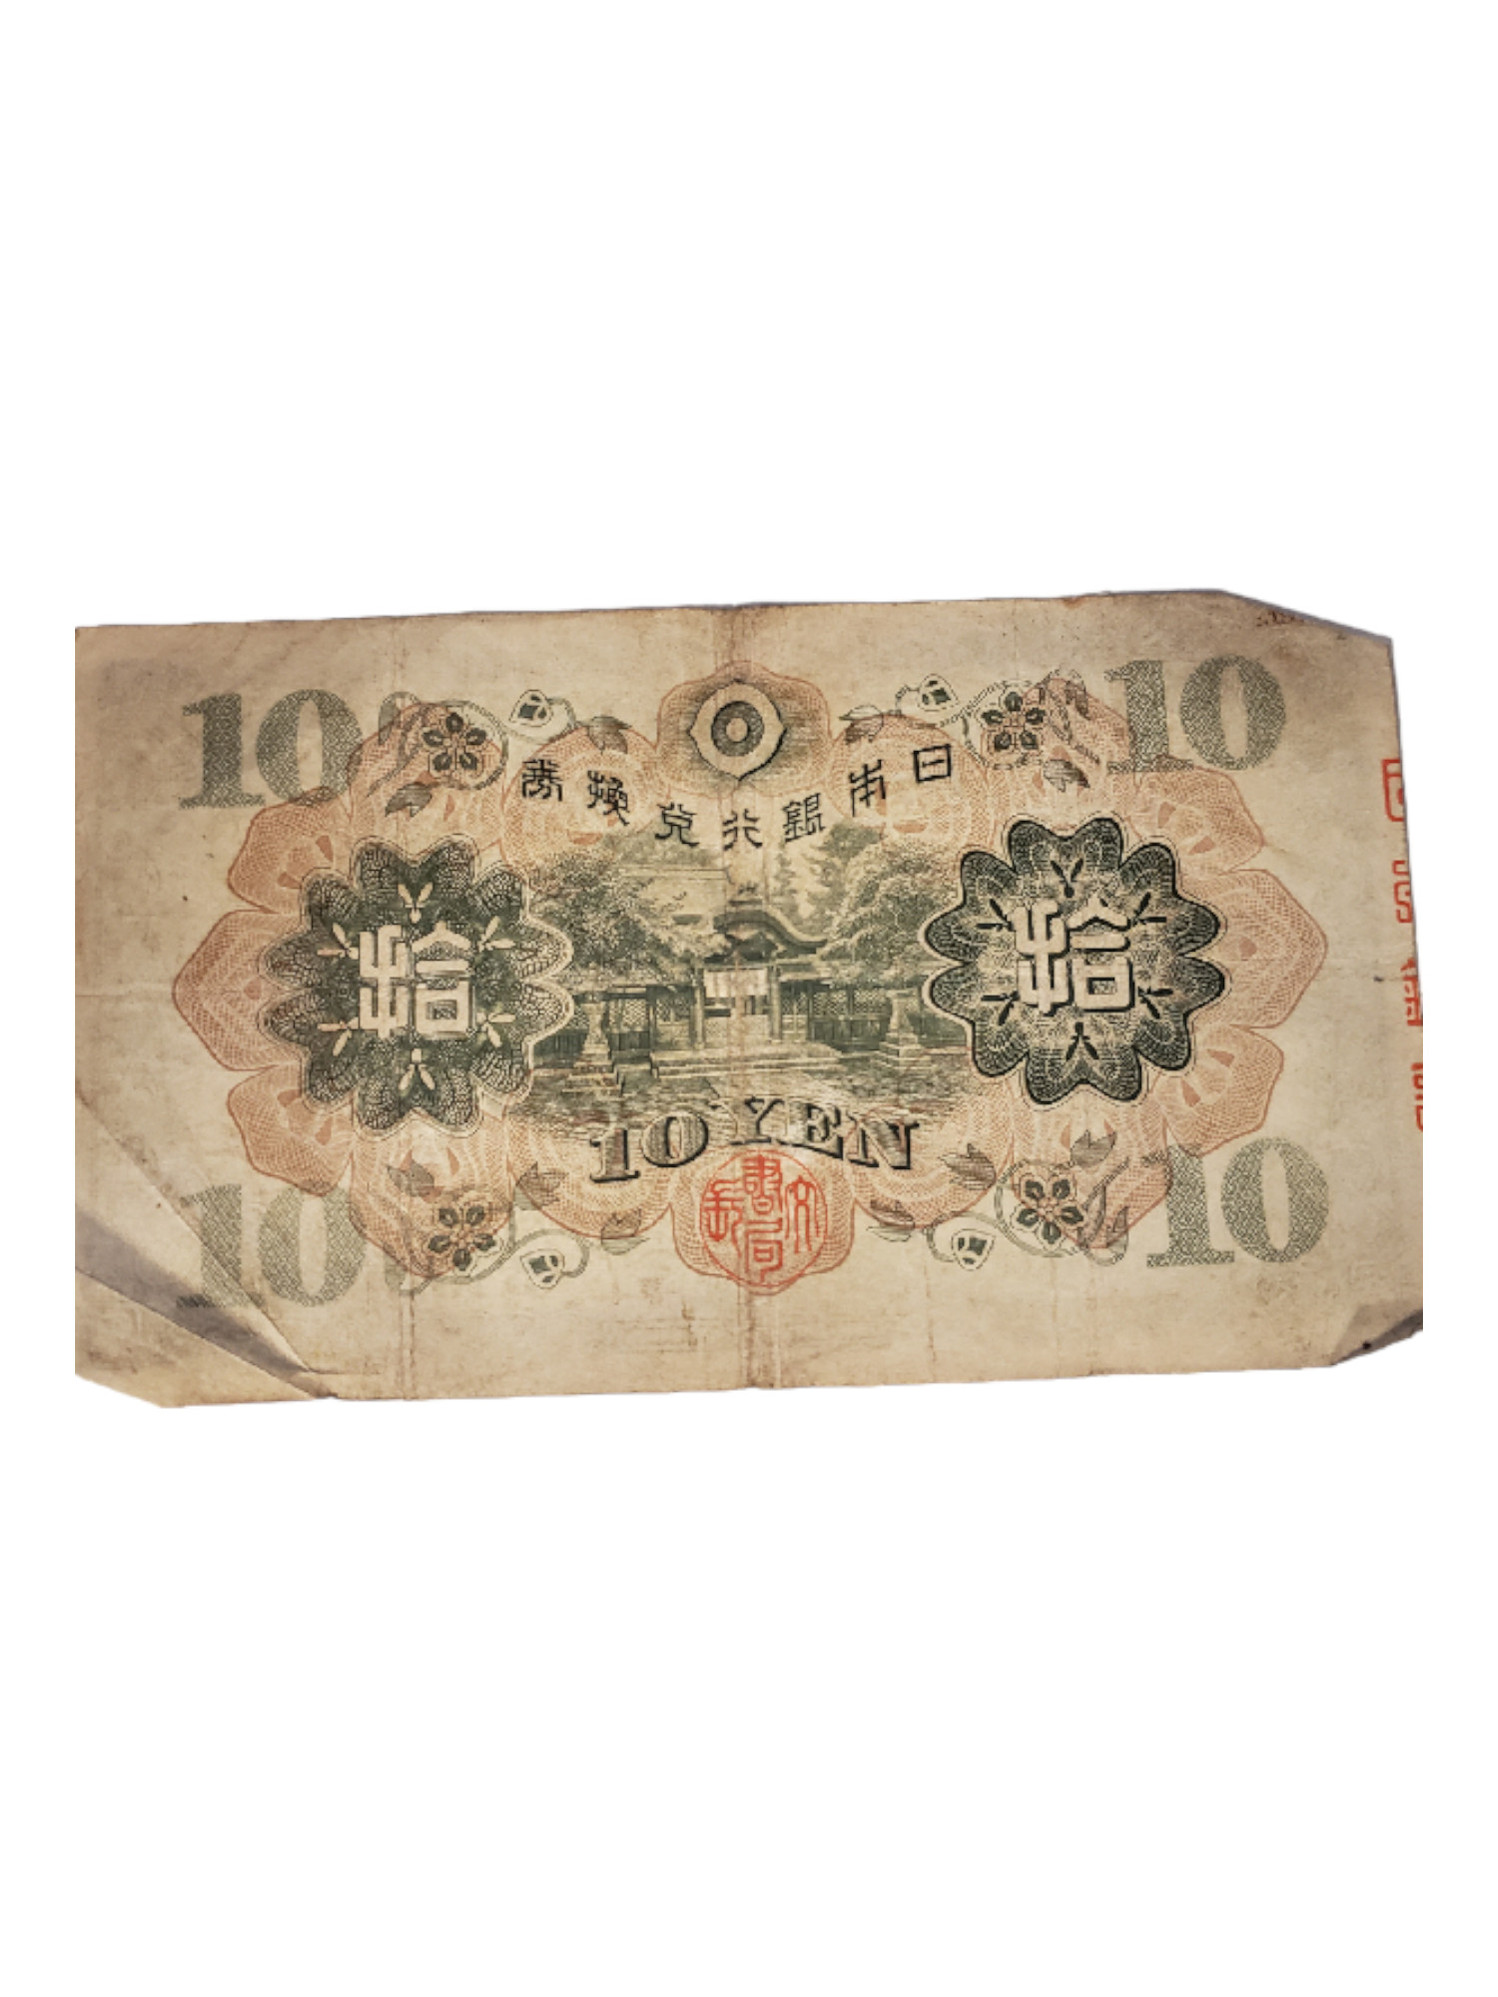 World War 2 Imperial Japanese 10 Yen banknote